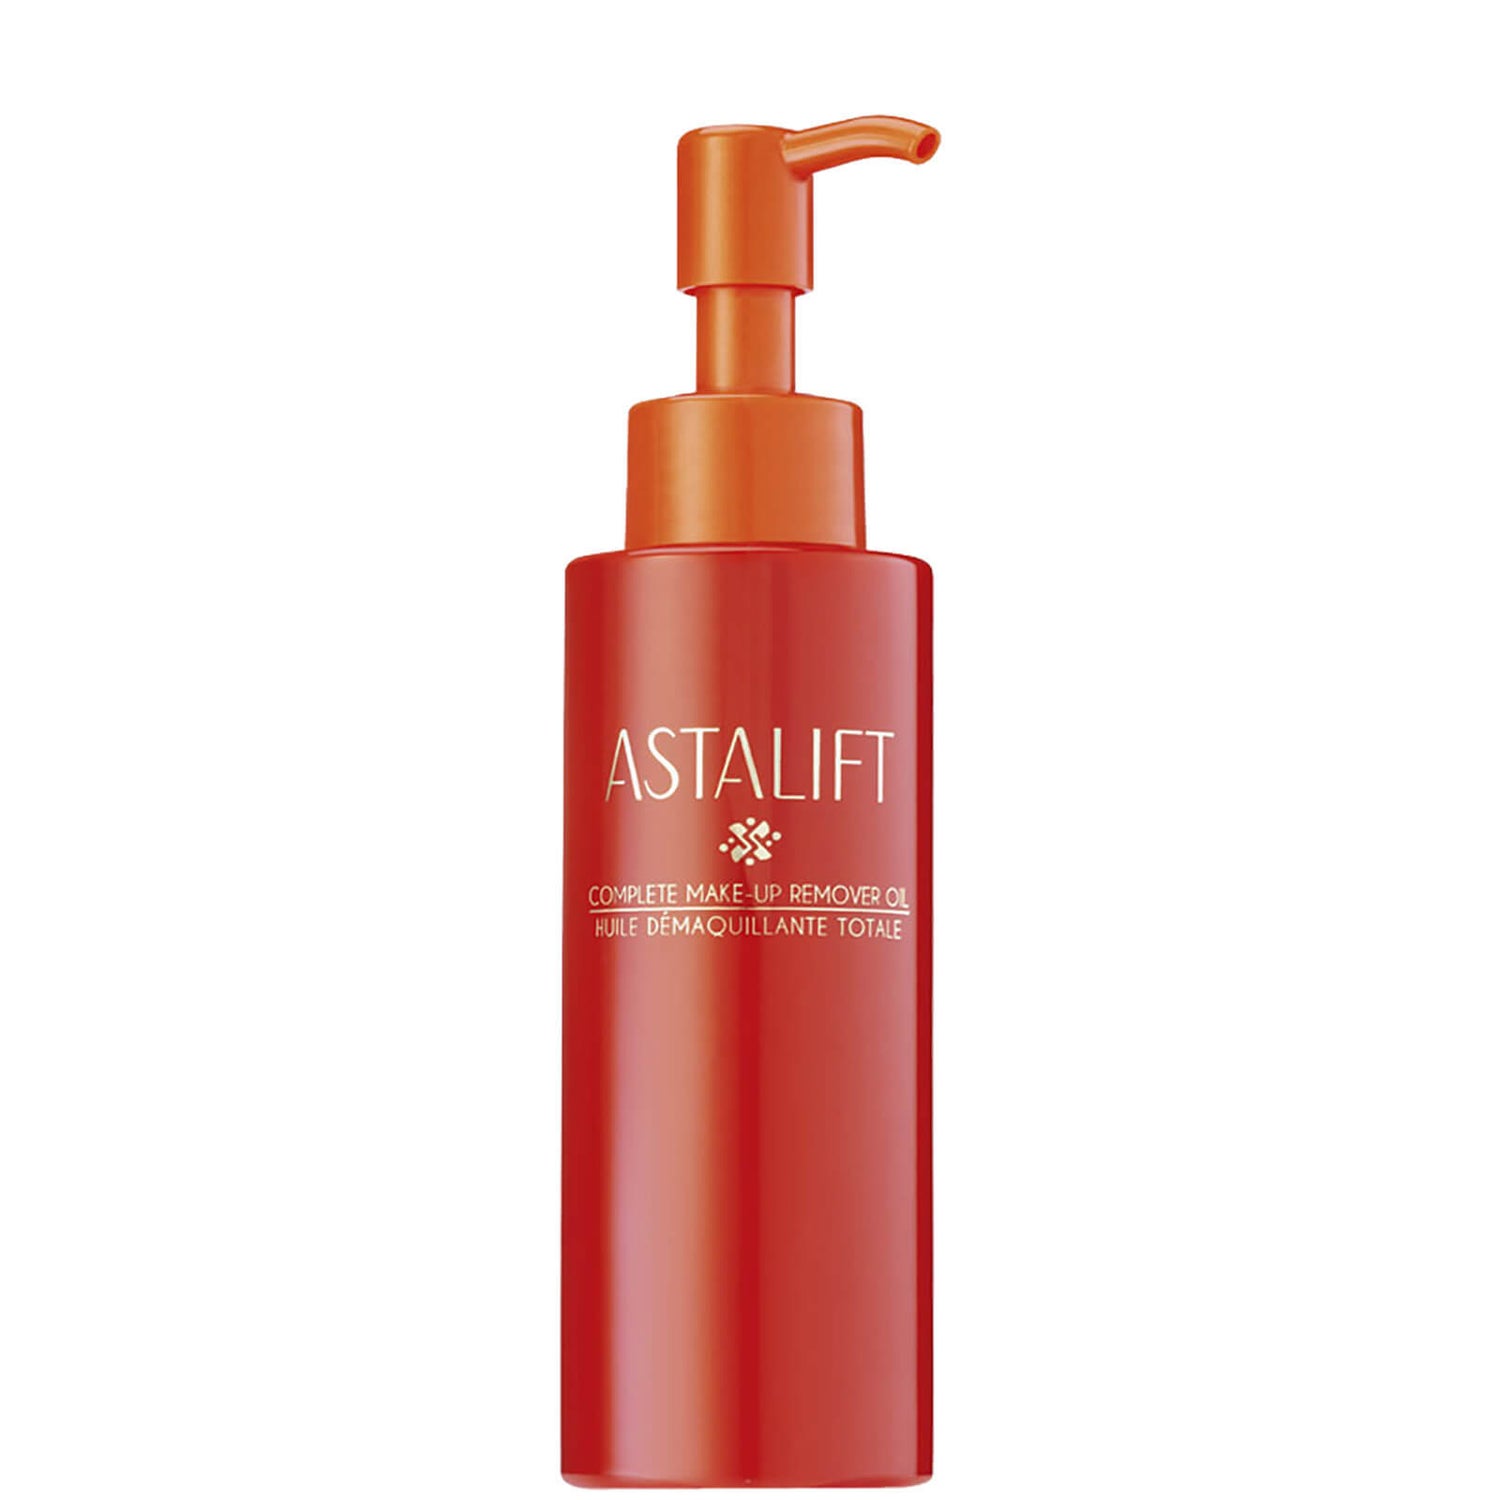 Astalift Complete Make-Up Remover Oil -meikinpoistoöljy (120ml)